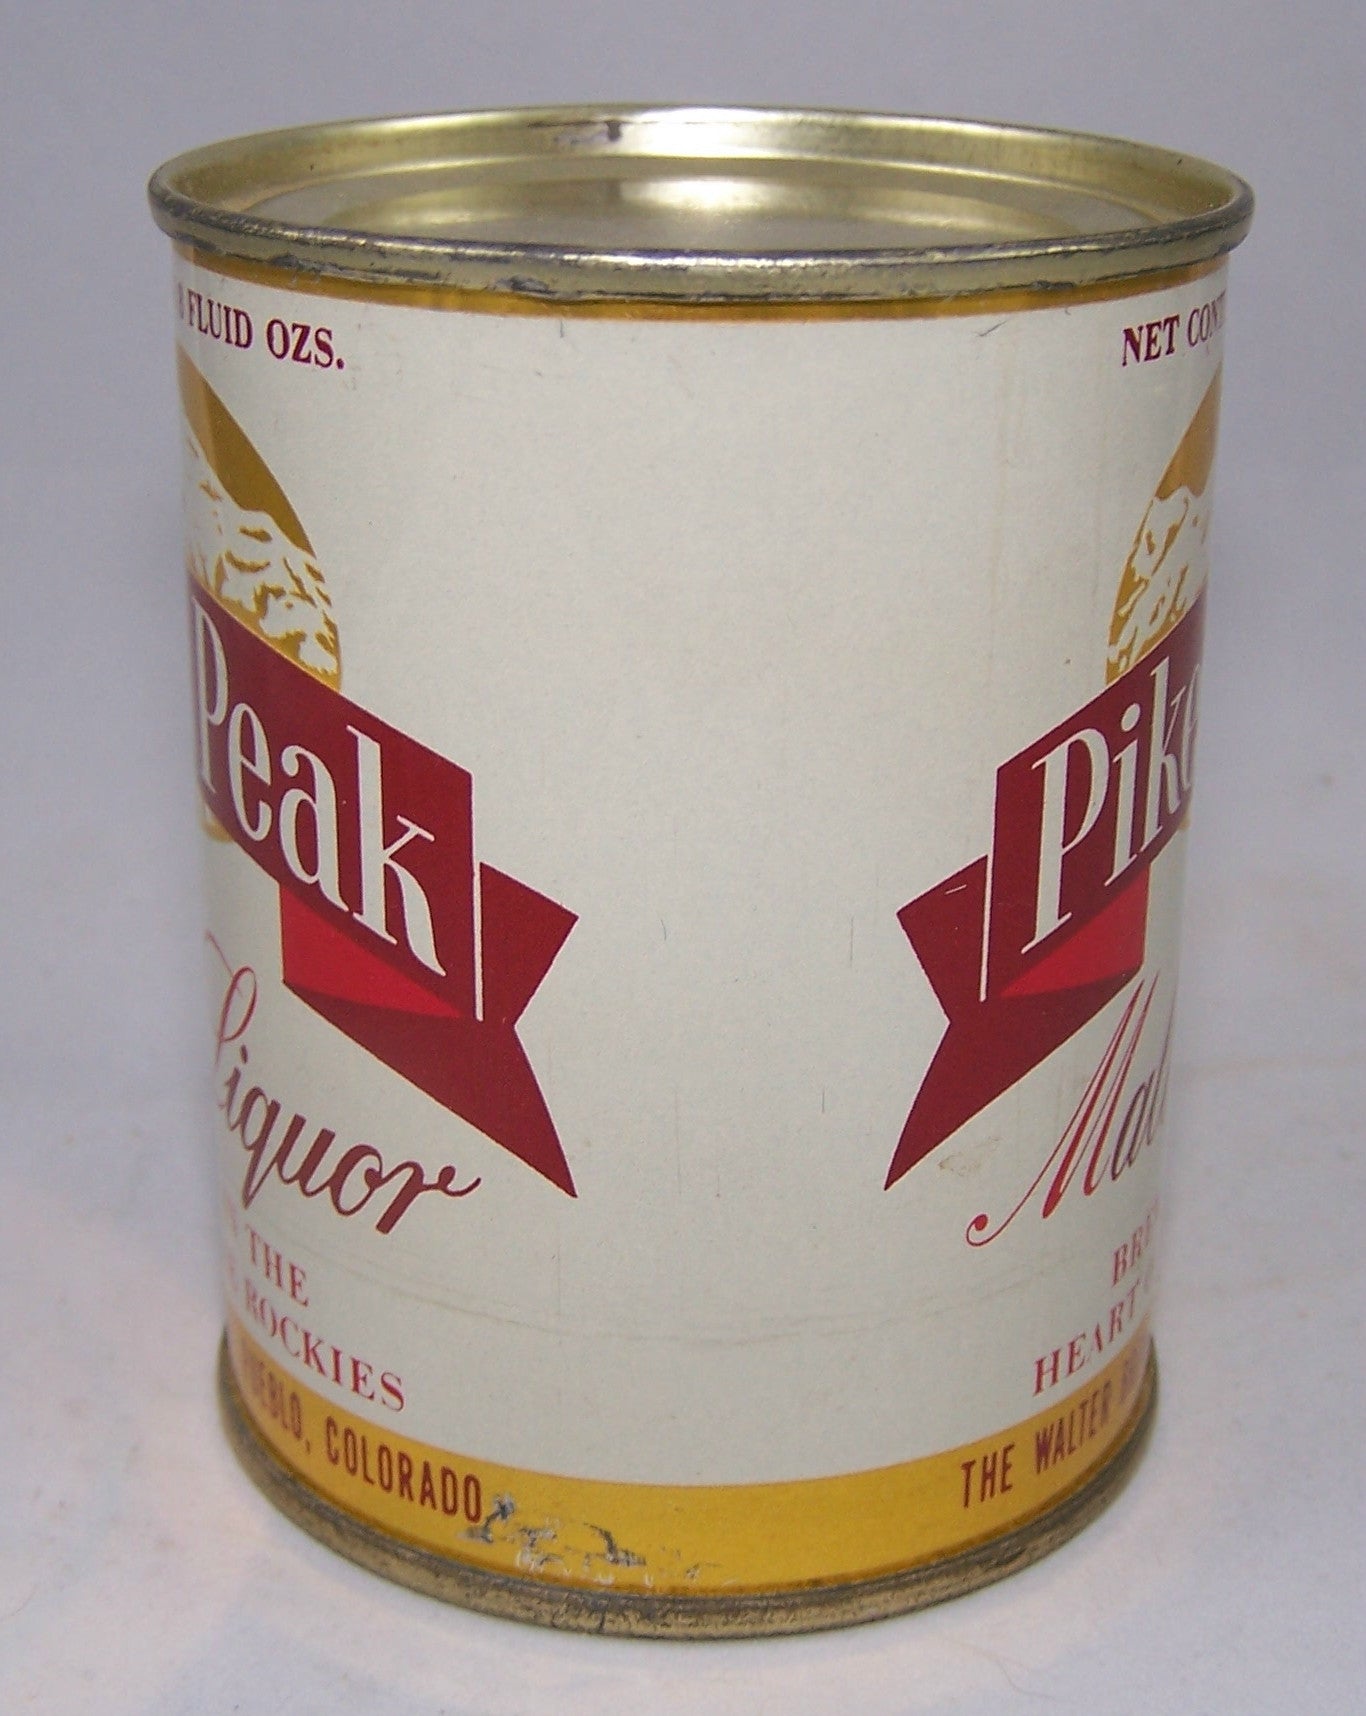 Pikes Peak Malt Liquor 8 ounce, USBC 242-7, Grade 1 to 1/1+Sold on 10/20/15